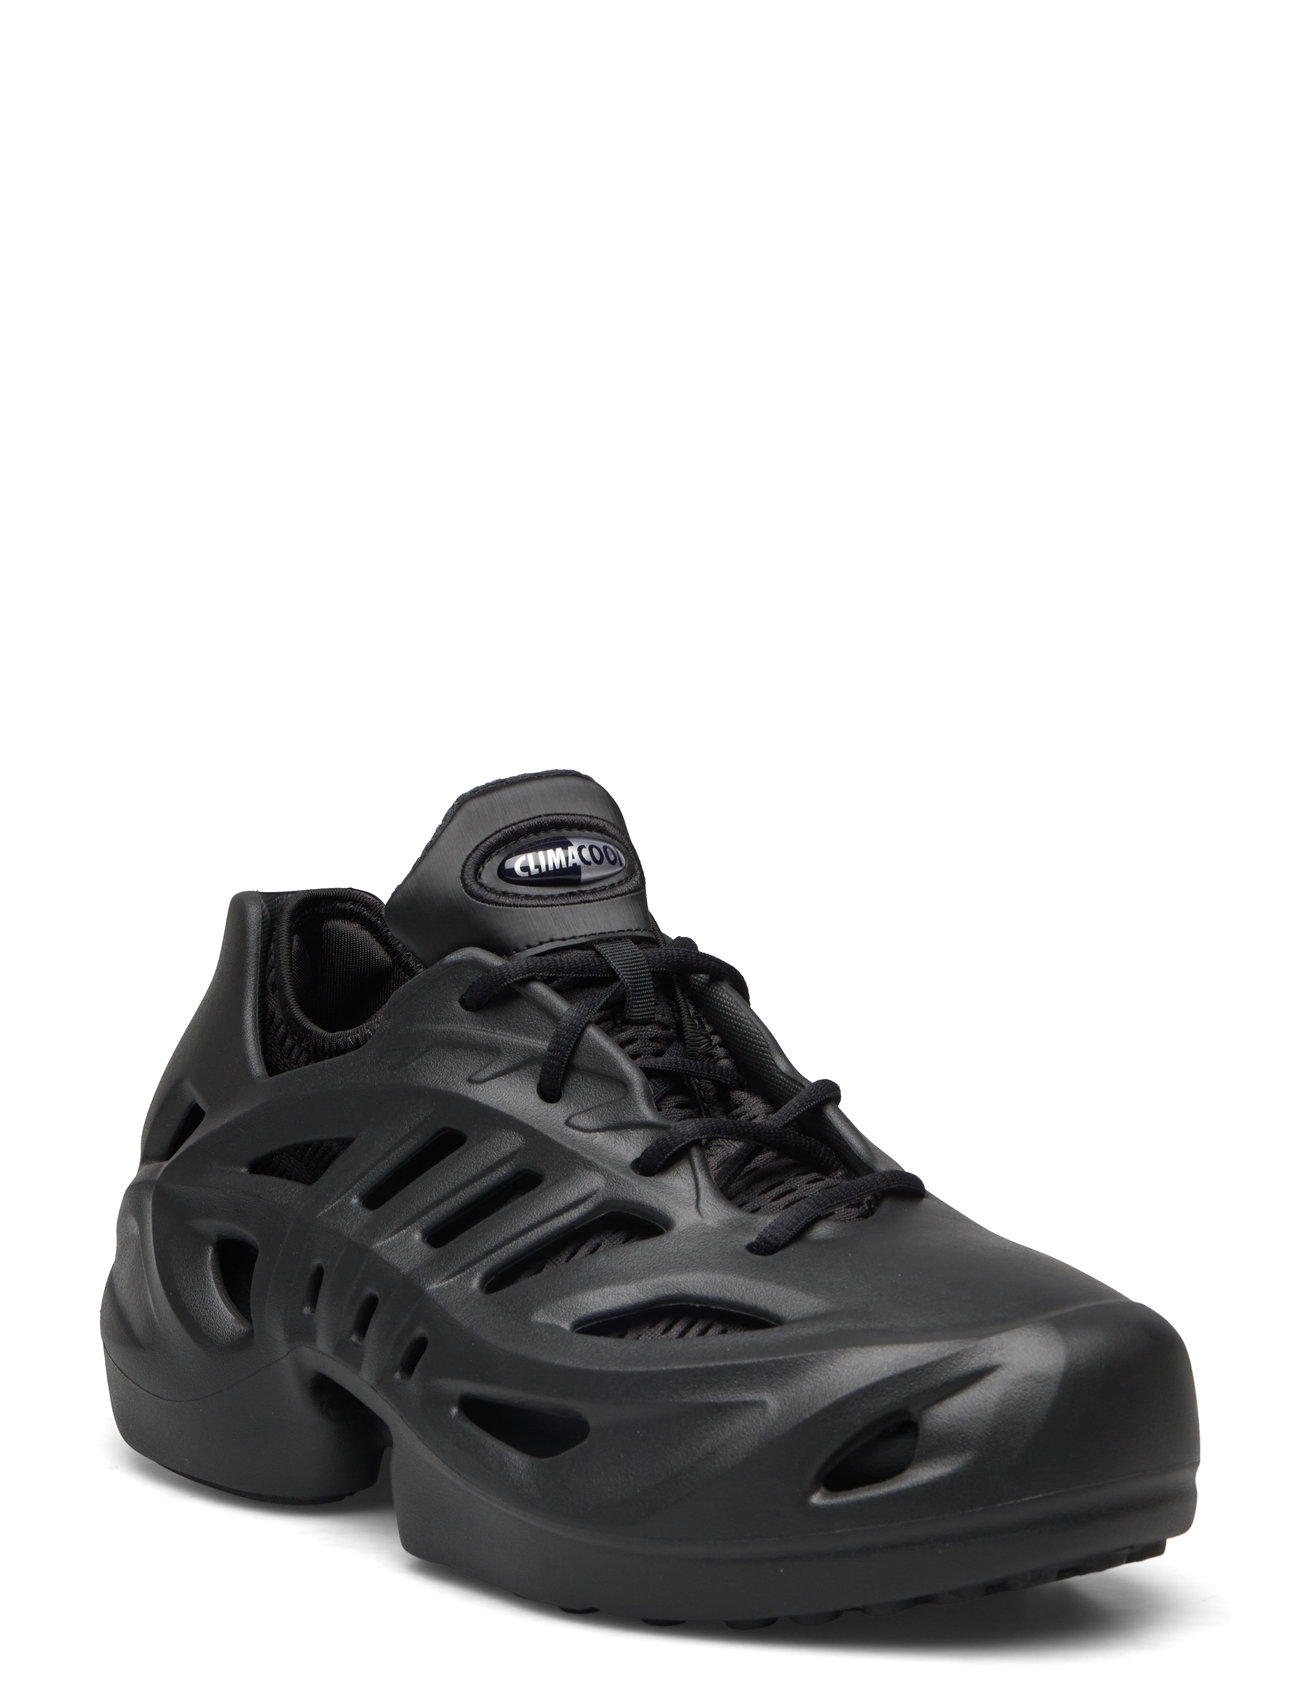 Adifom Climacool Sport Sneakers Low-top Sneakers Black Adidas Originals